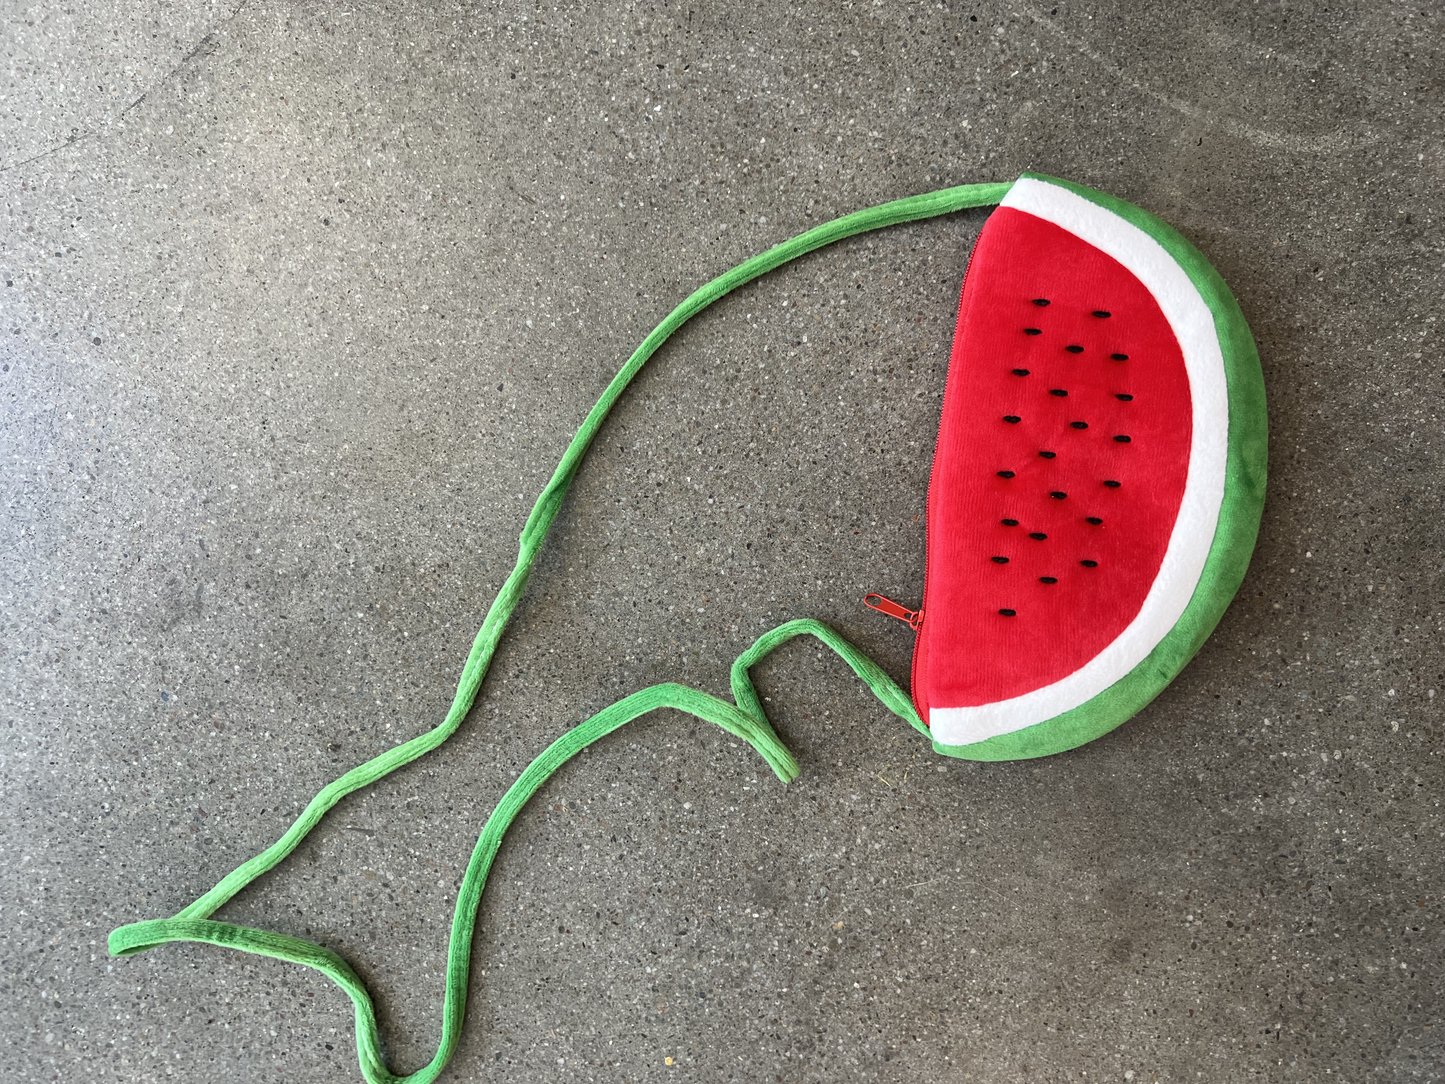 Watermelon purse